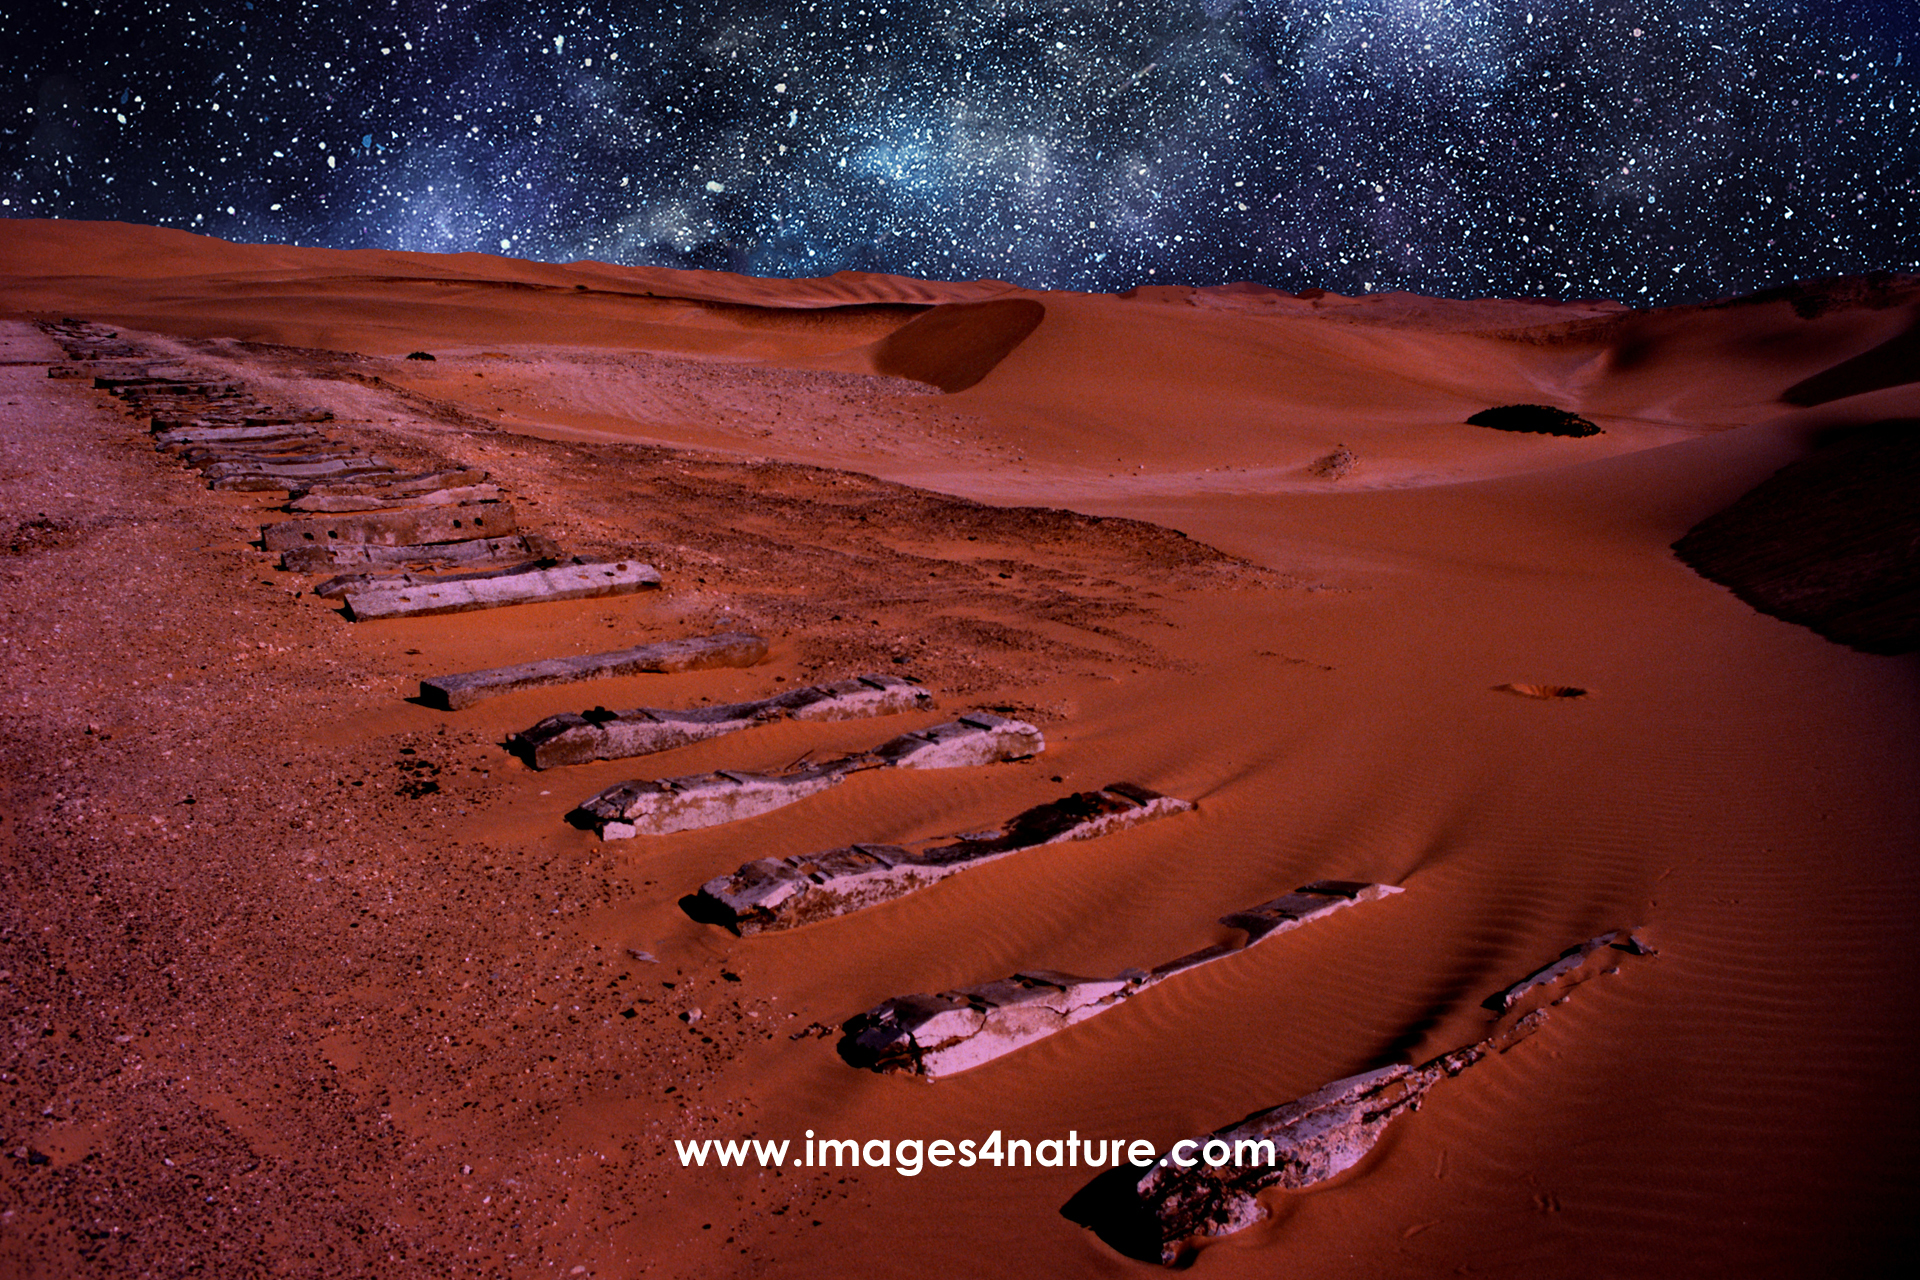 Wooden railway sleepers in red sand dunes against night sky